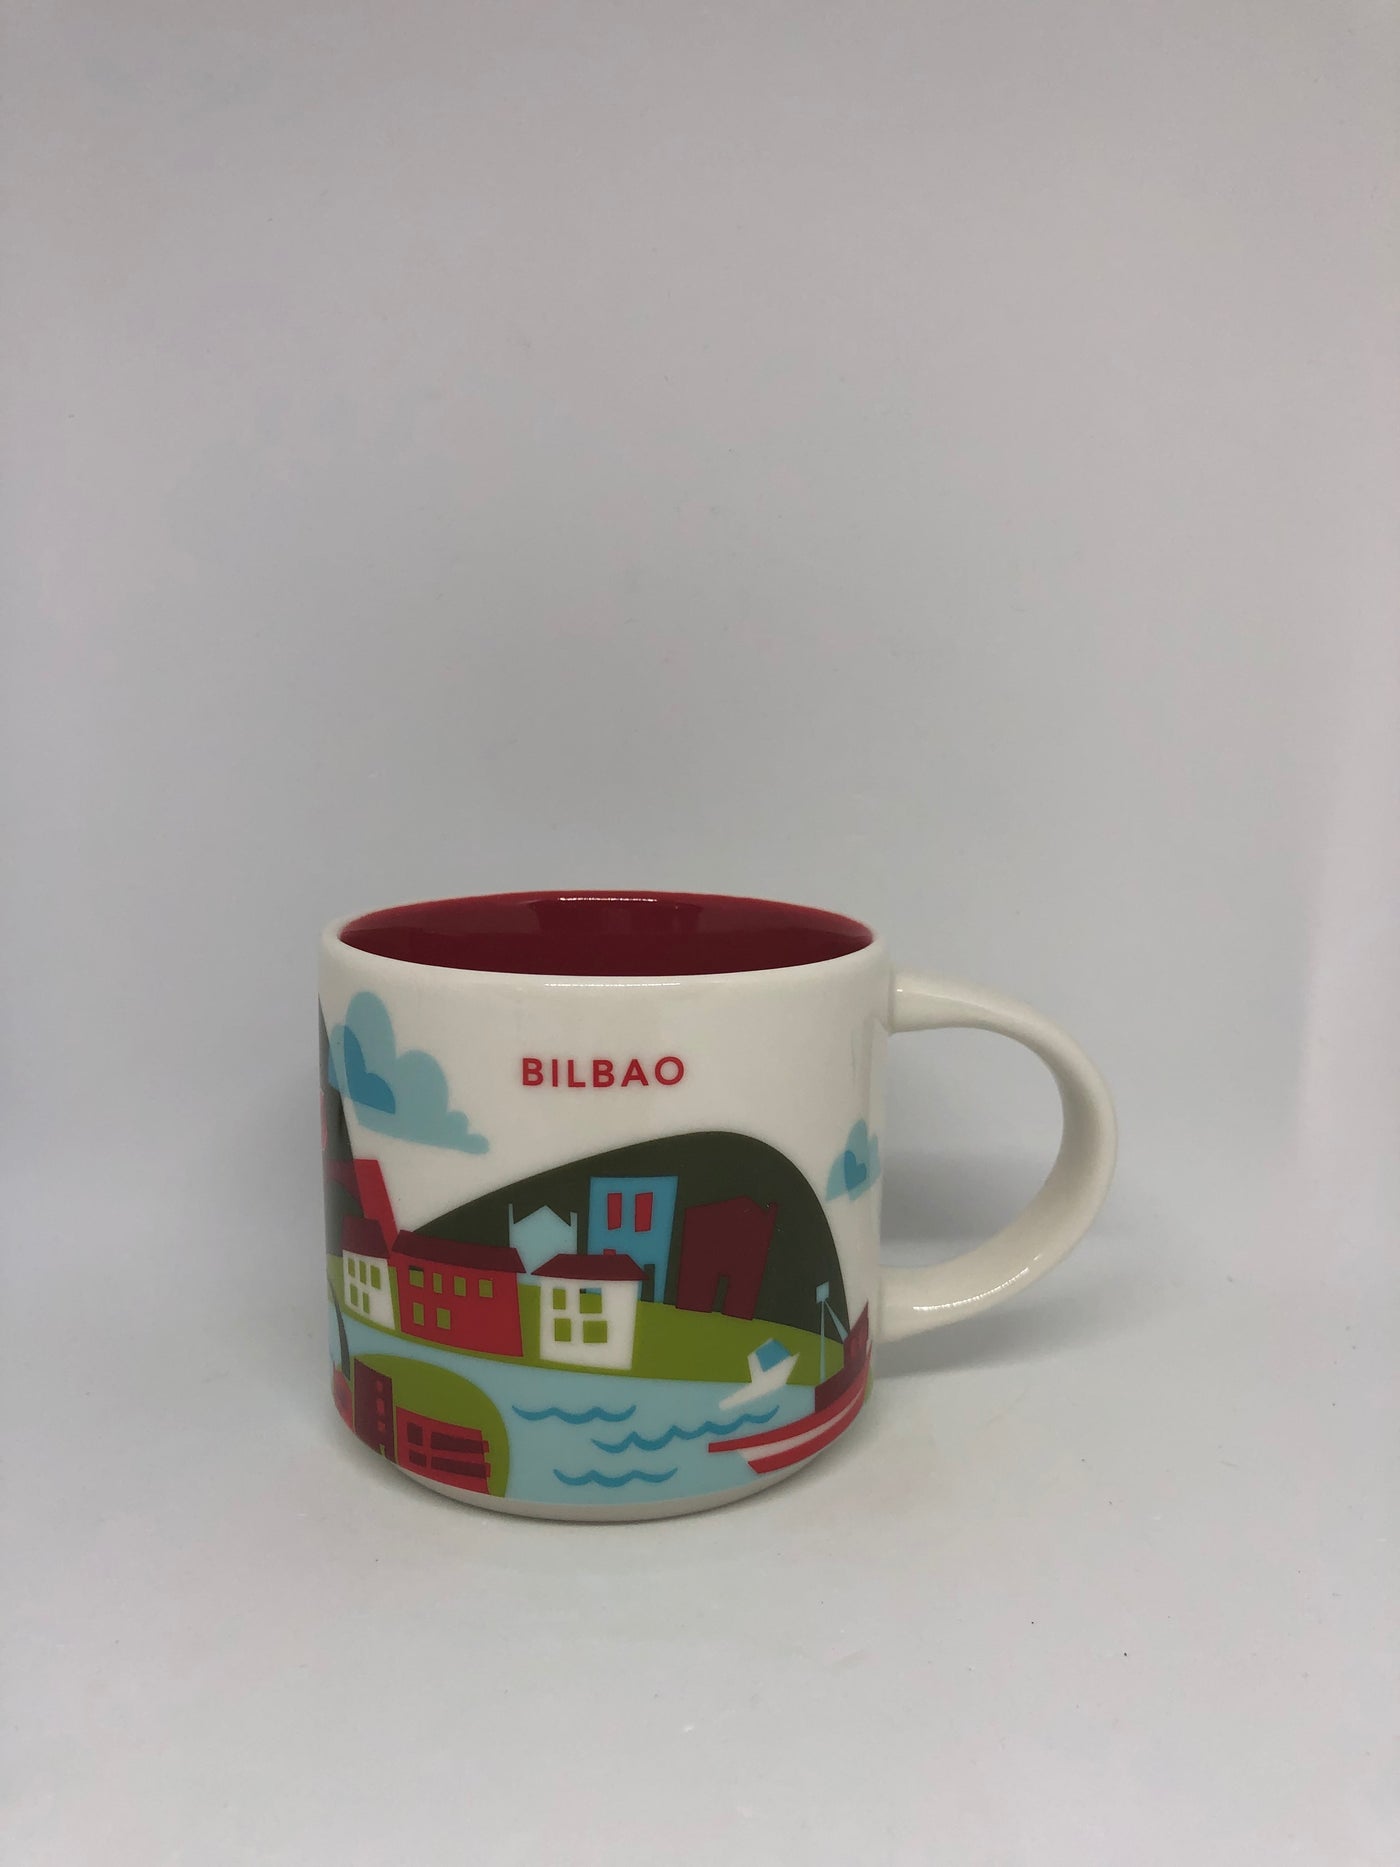 Starbucks You Are Here Bilbao Spain Ceramic Coffee Mug New with Box